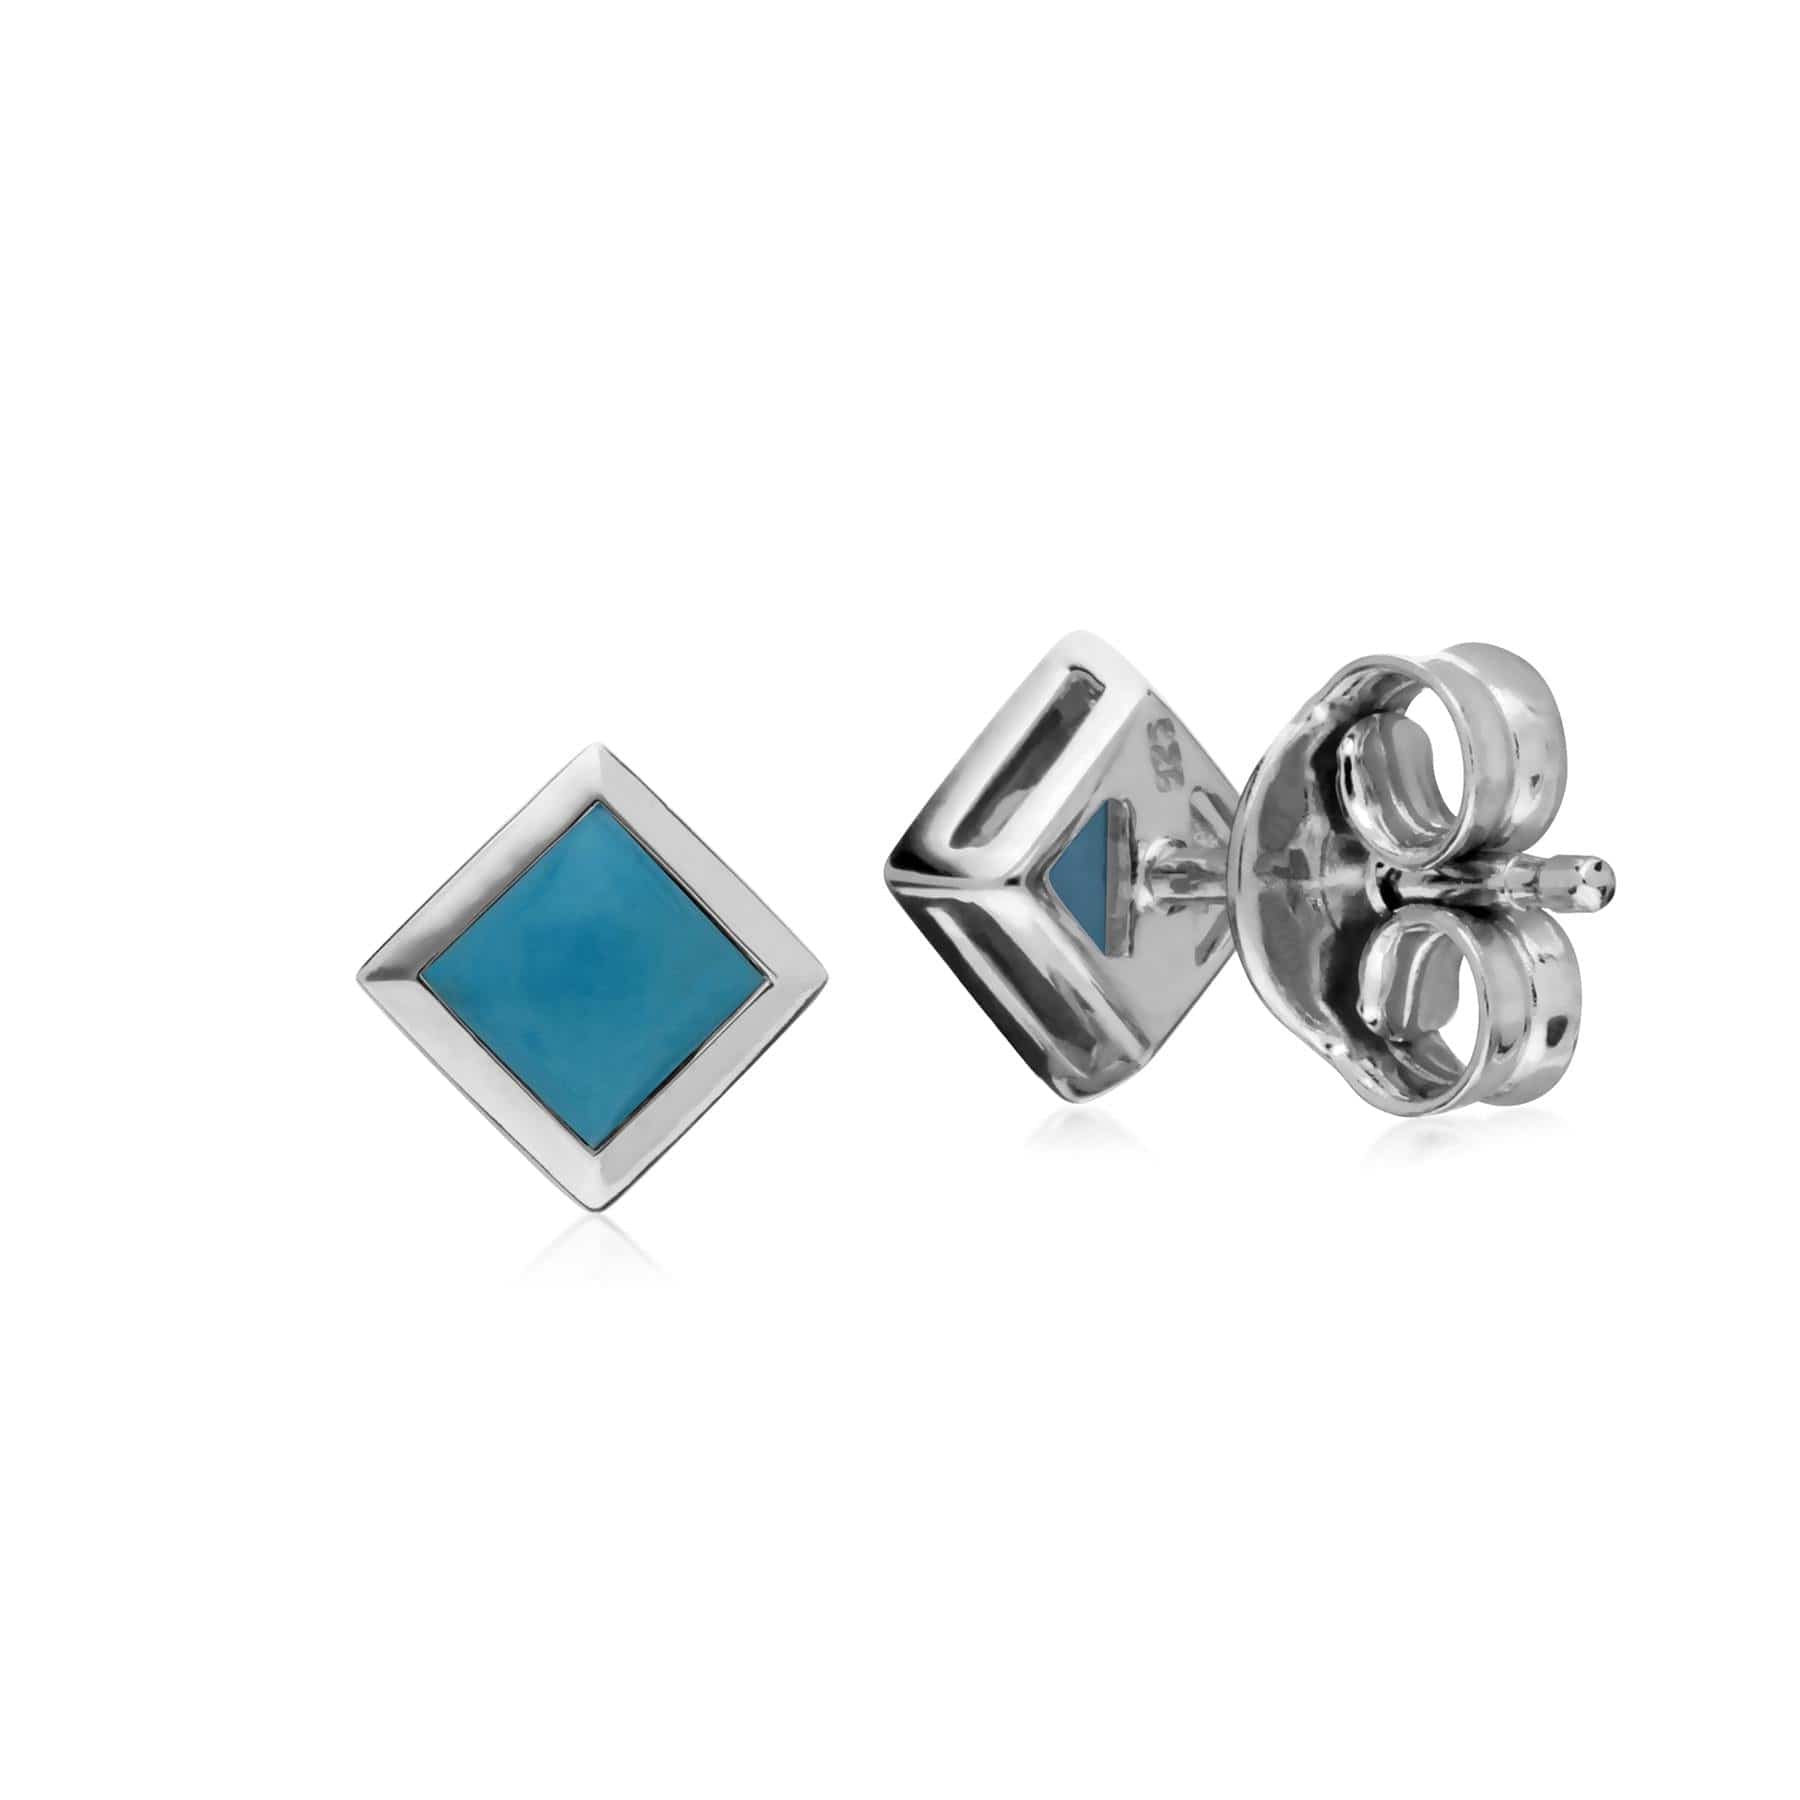 Classic Square Turquoise Bezel Stud Earrings in 925 Sterling Silver - Gemondo